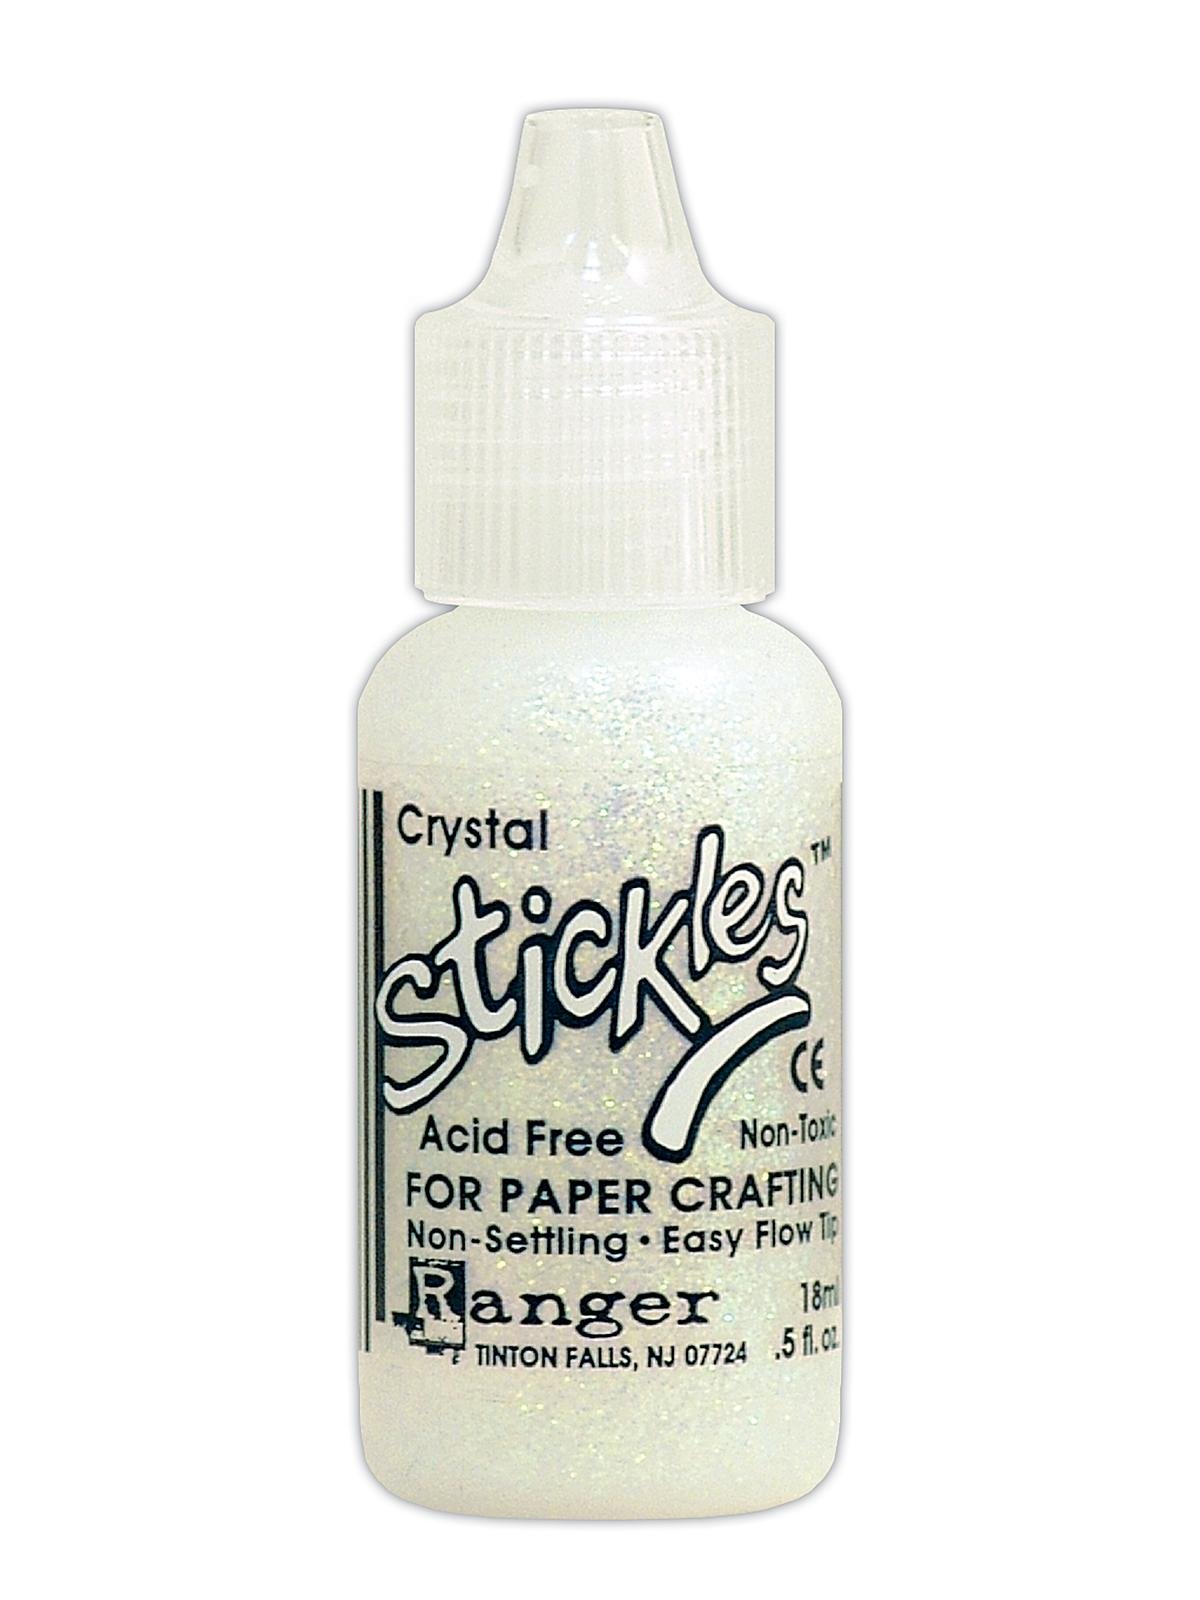 Stickles Glitter Glue: Black Diamond